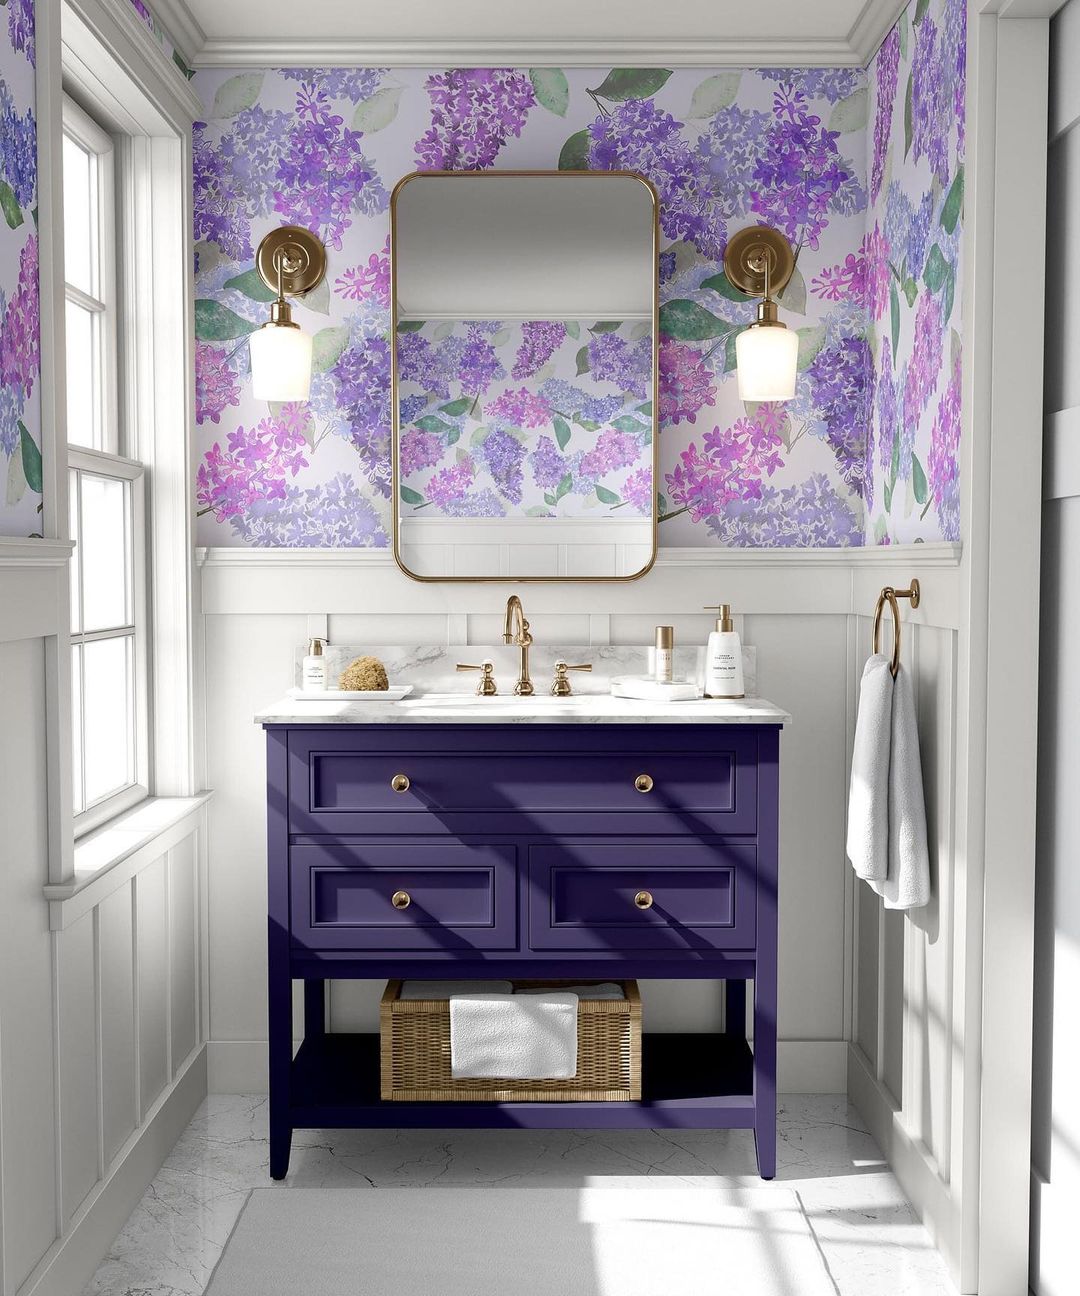 https://www.extraspace.com/blog/wp-content/uploads/2020/11/Ways-to-Go-Green-Bathroom-design-with-eco-friendly-wallpaper.jpg